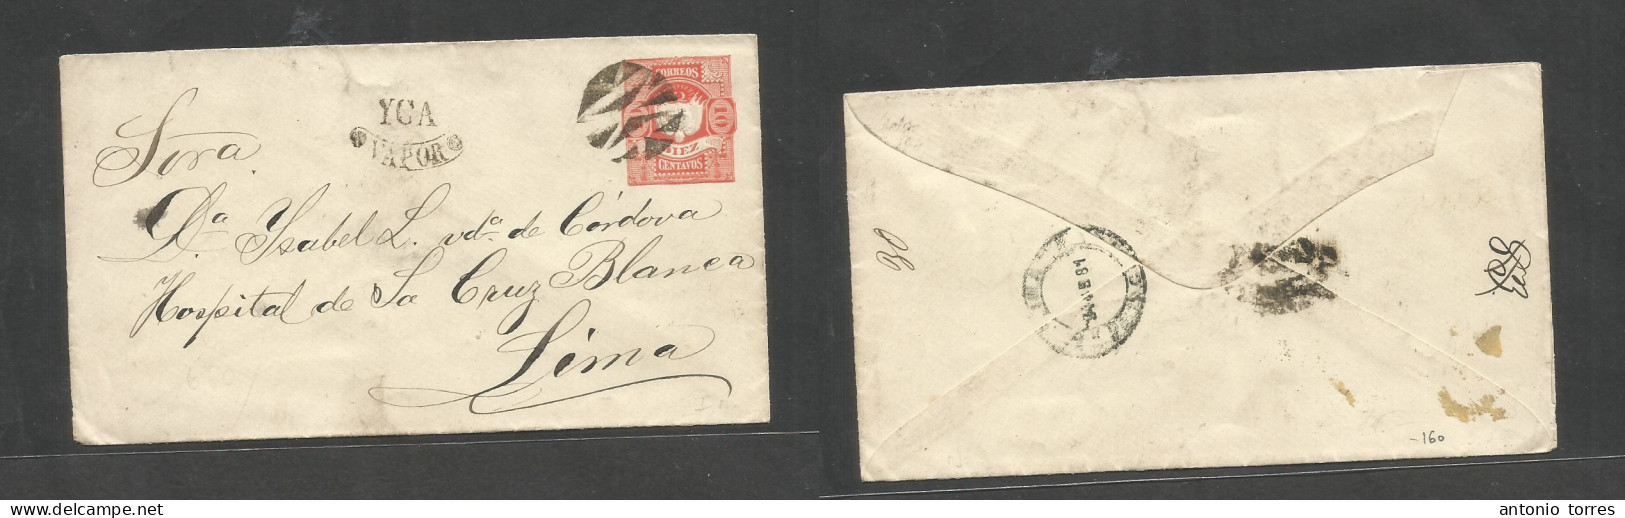 Peru. 1881 Yca - Lima (24 March) 10c Vermilion Embossed Stationary Envelope, Depart Cork Cancel + "VIA VAPOR" Illustrate - Pérou